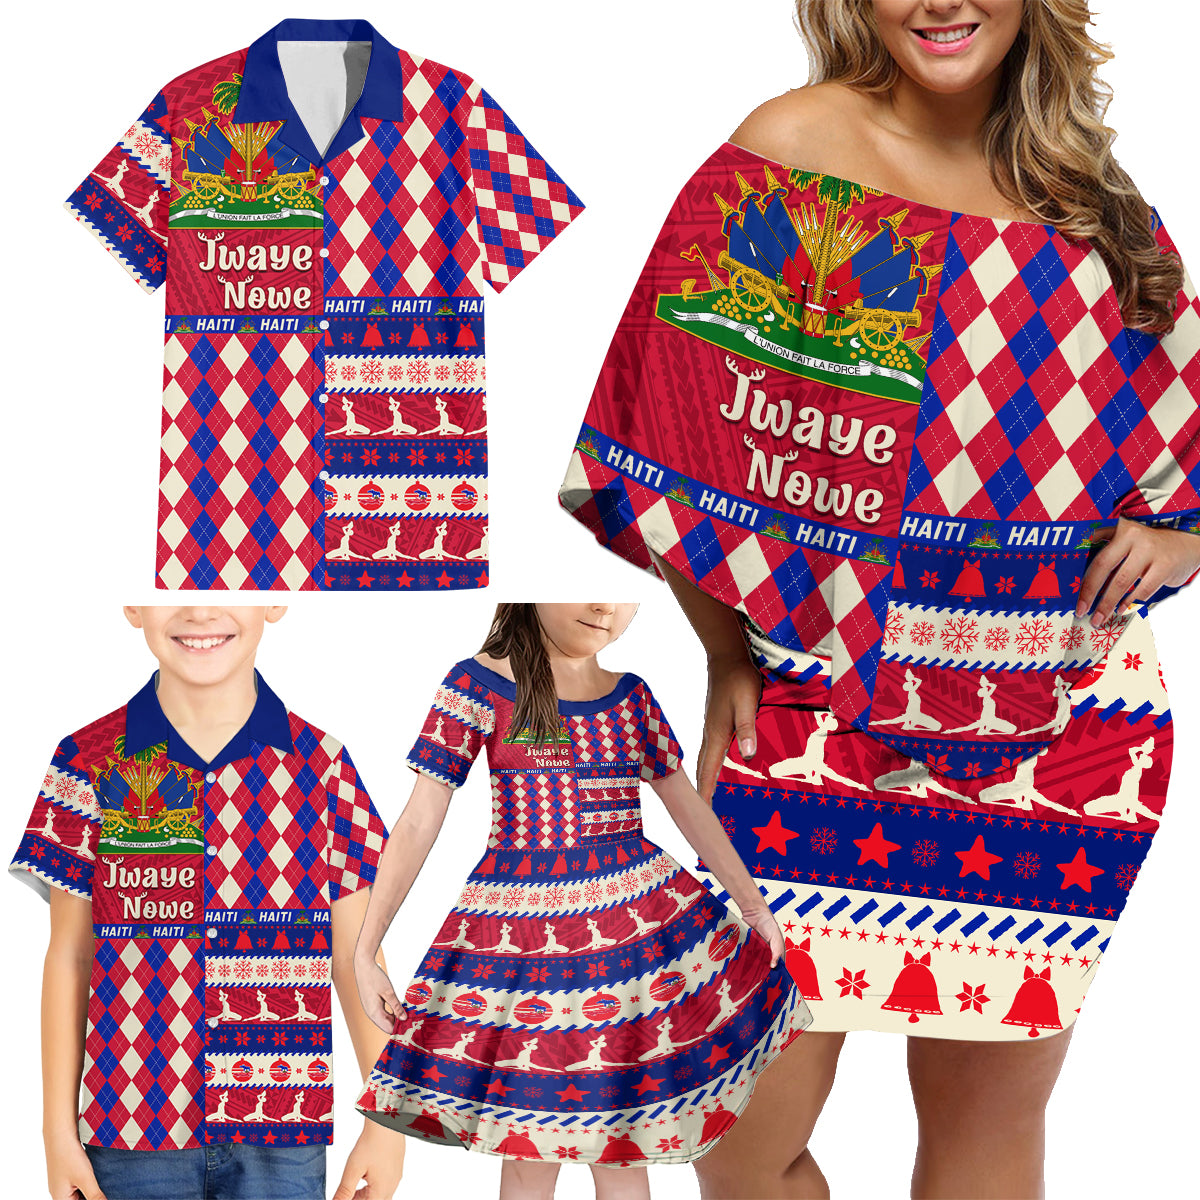 haiti-christmas-family-matching-off-shoulder-short-dress-and-hawaiian-shirt-jwaye-nowe-2023-with-coat-of-arms